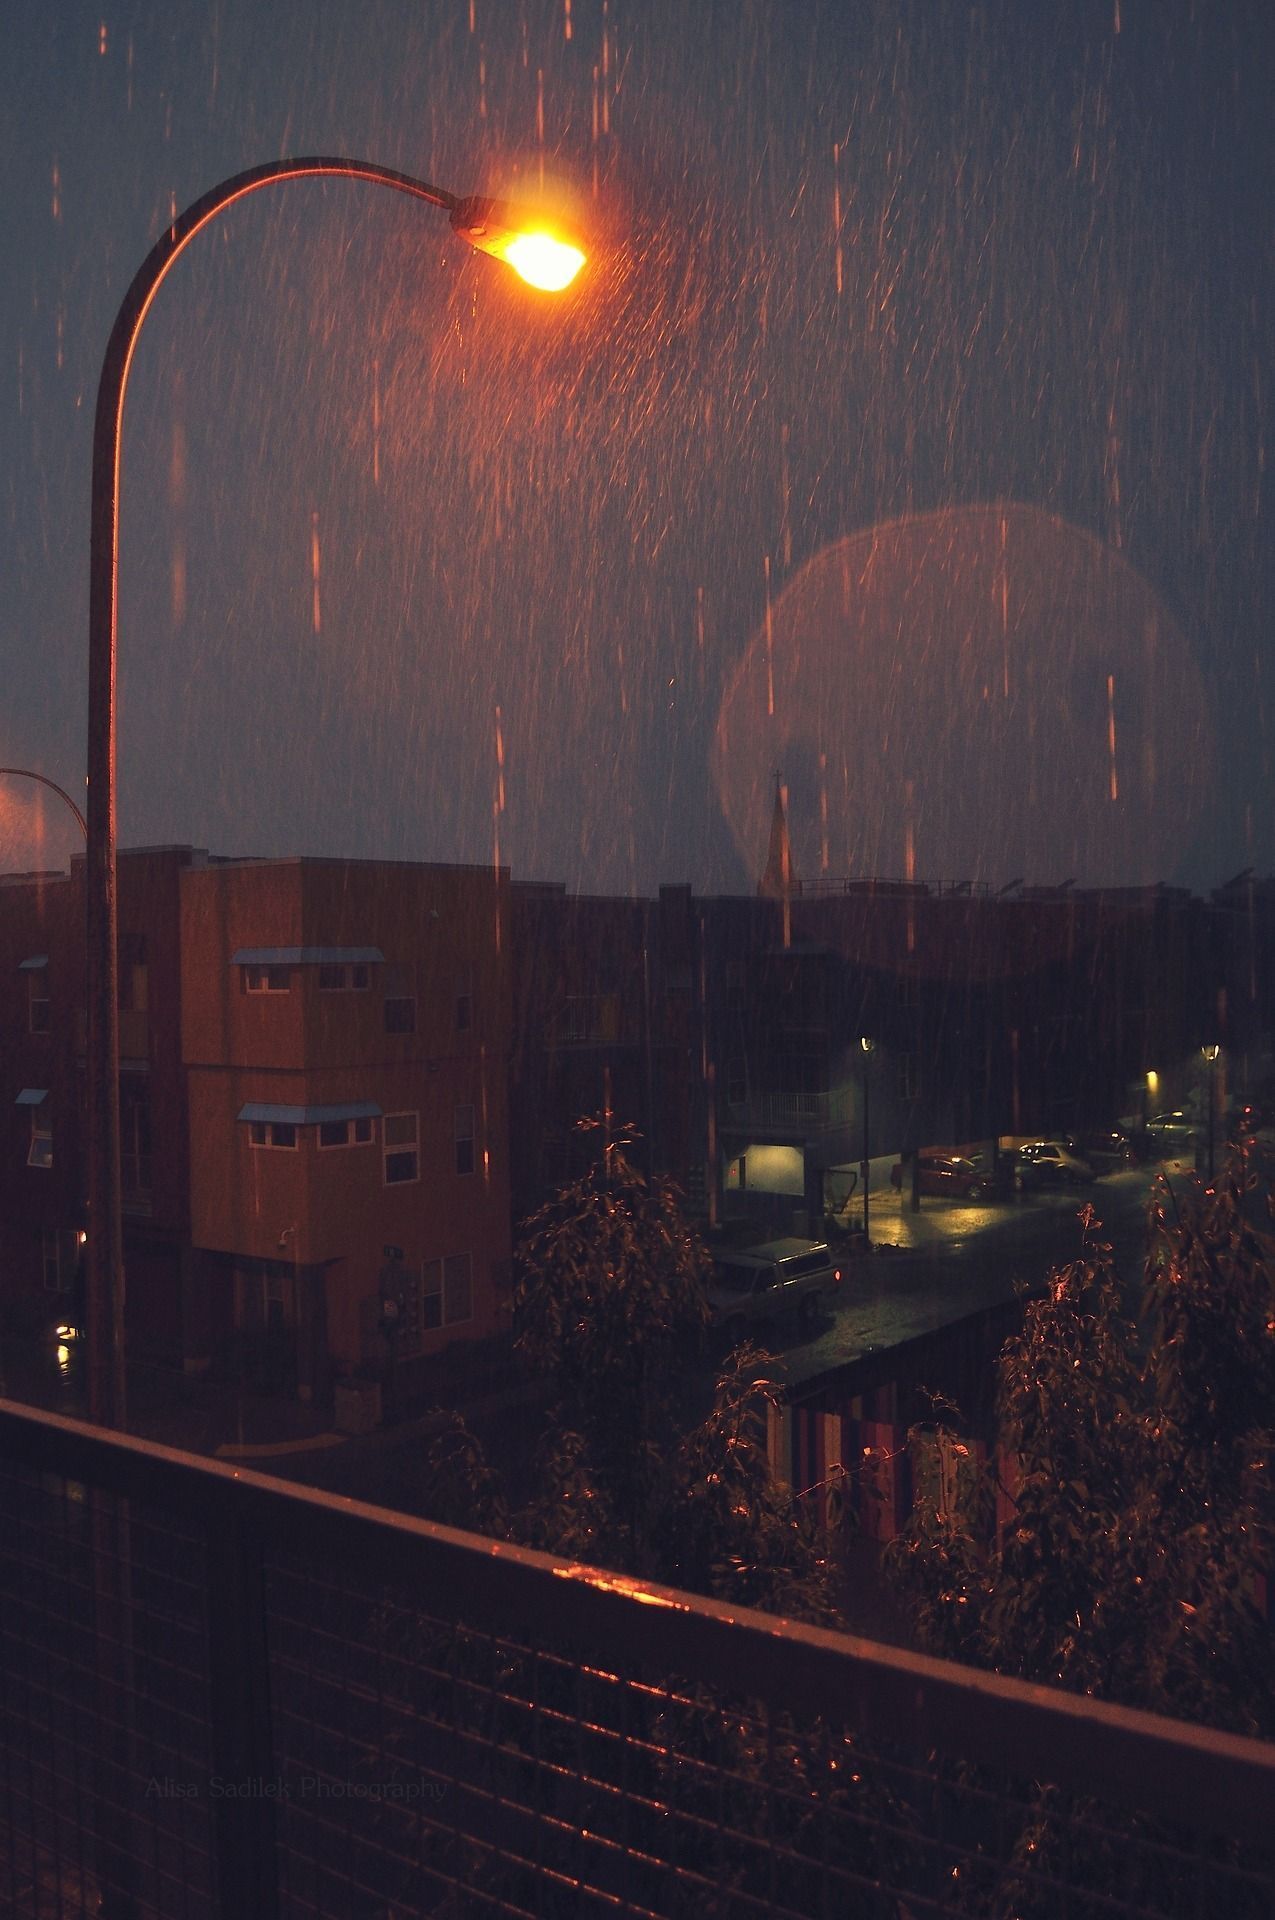 A street lamp shines in the rain, illuminating the street below. - Rain